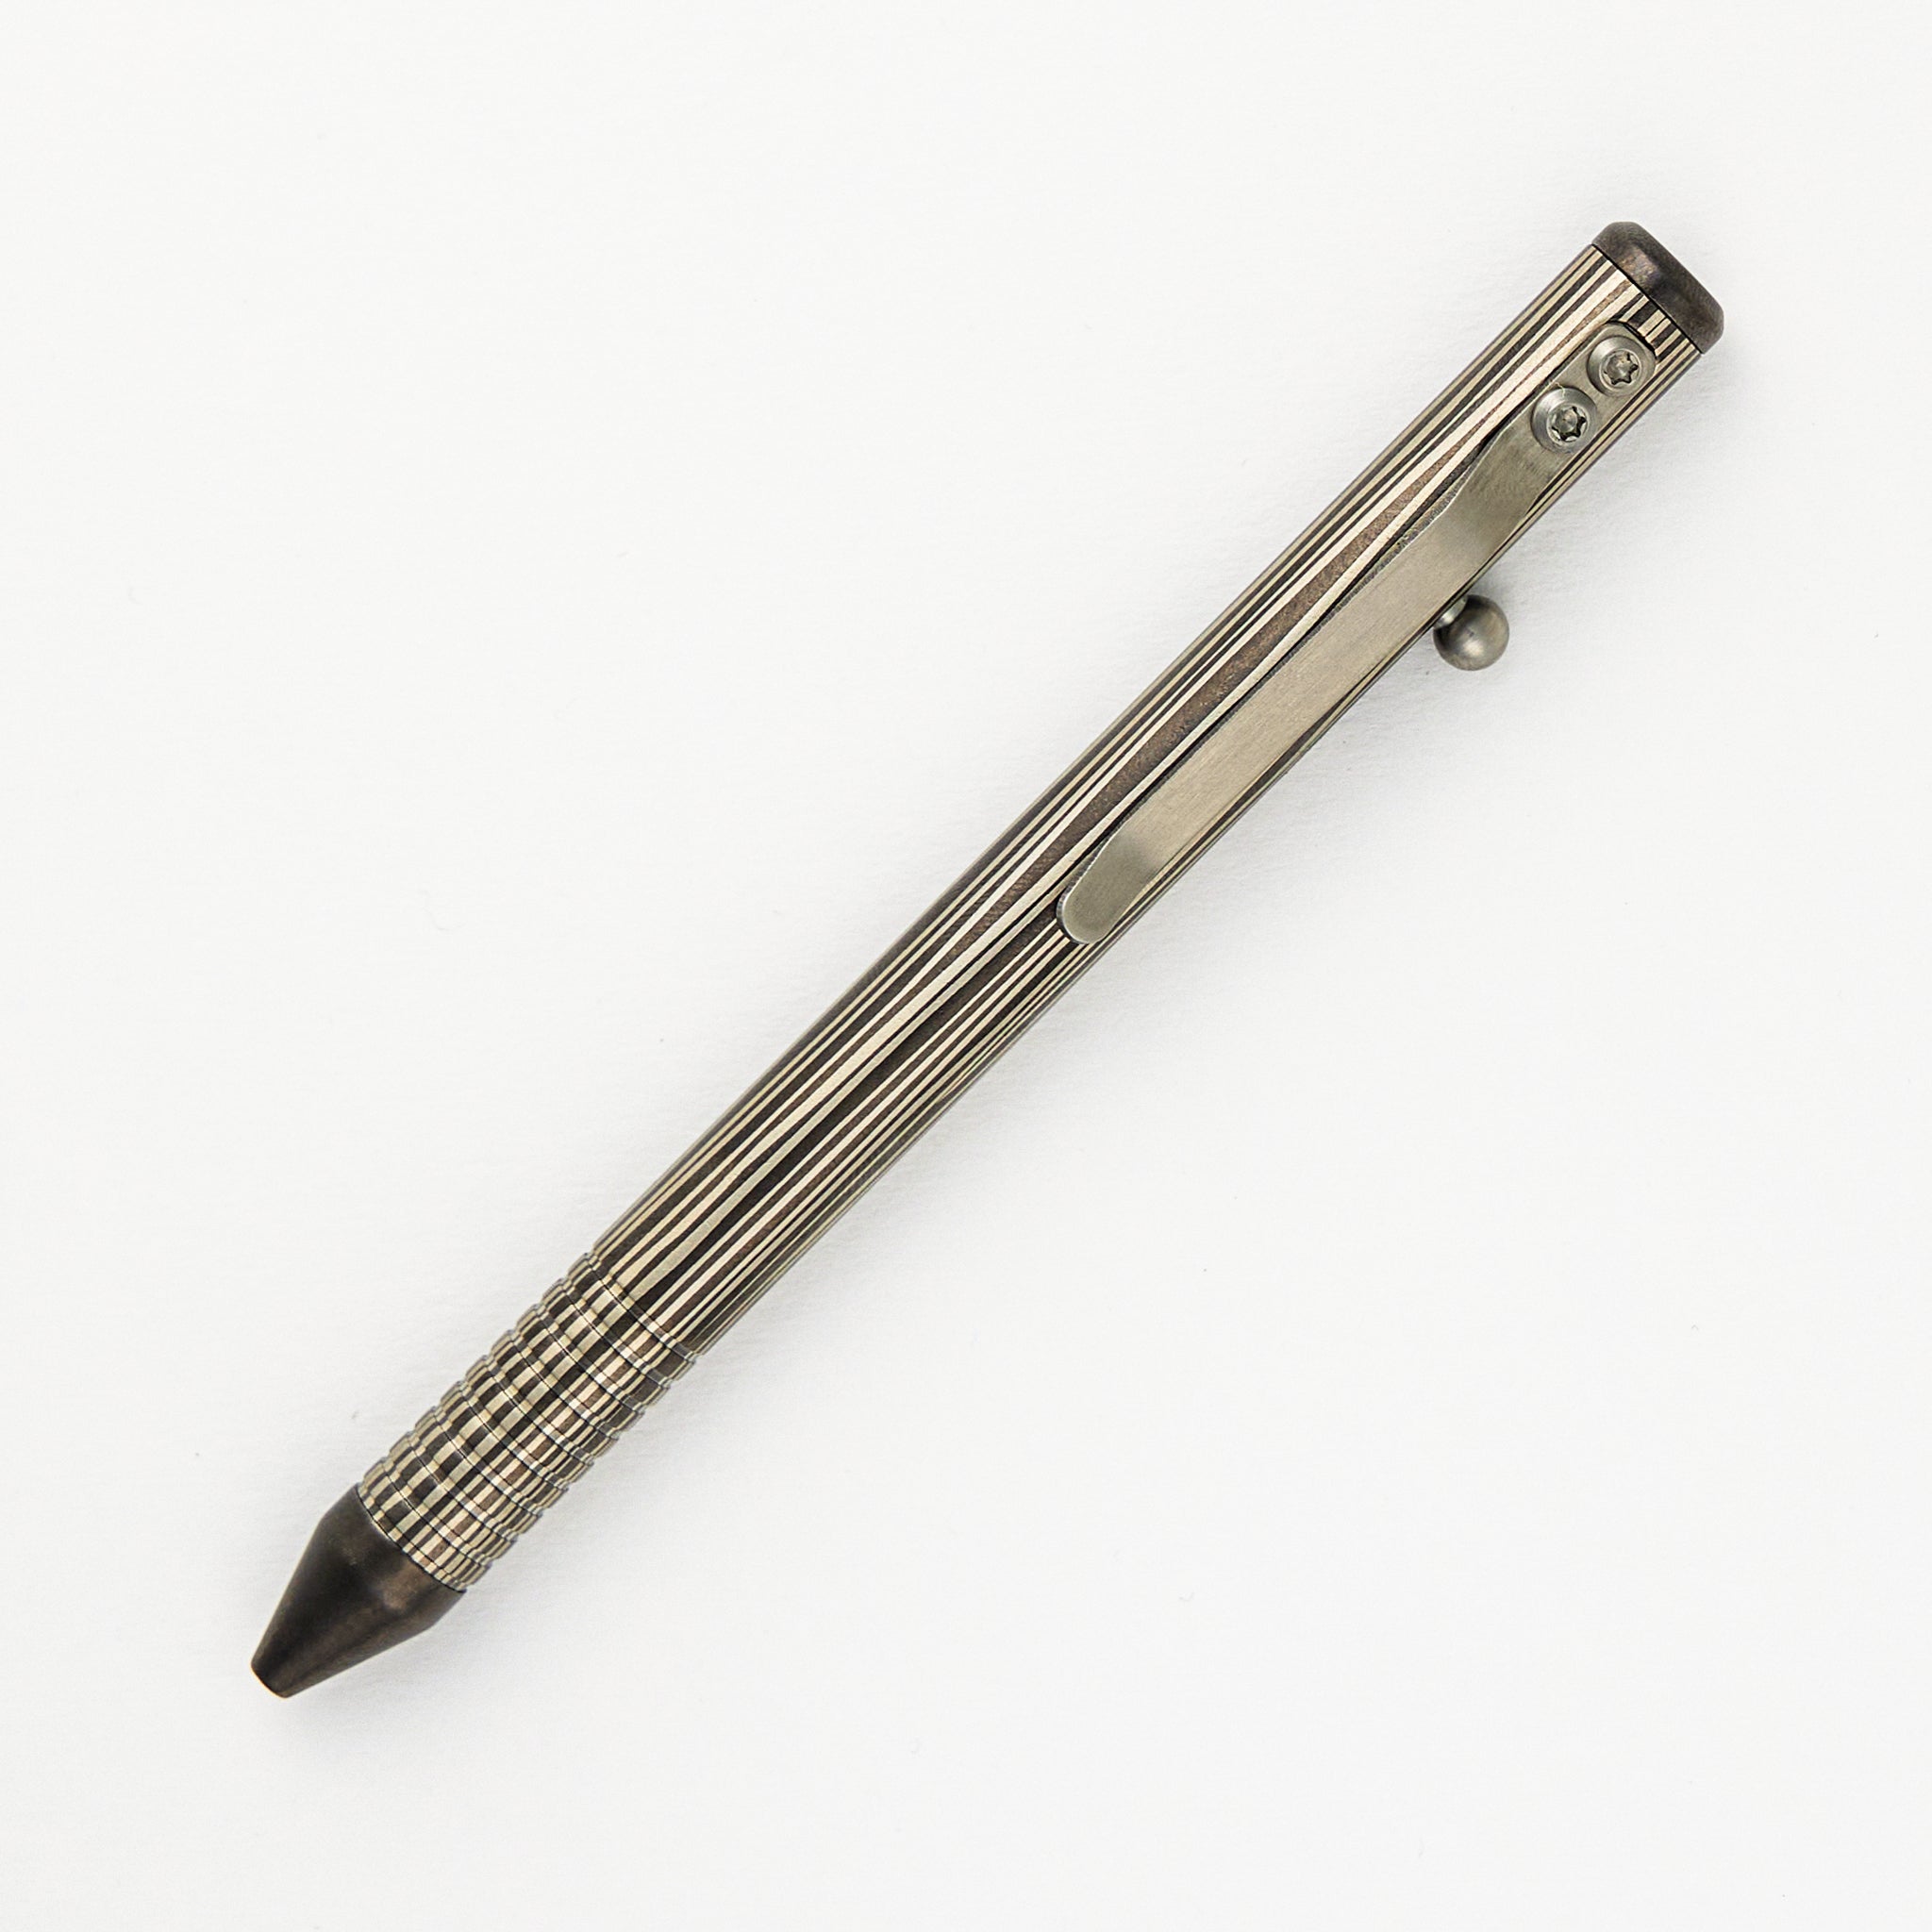 Fellhoelter/Cptn Axel Full Size TiBolt Pen - Woody Copper Black Nickel Plated